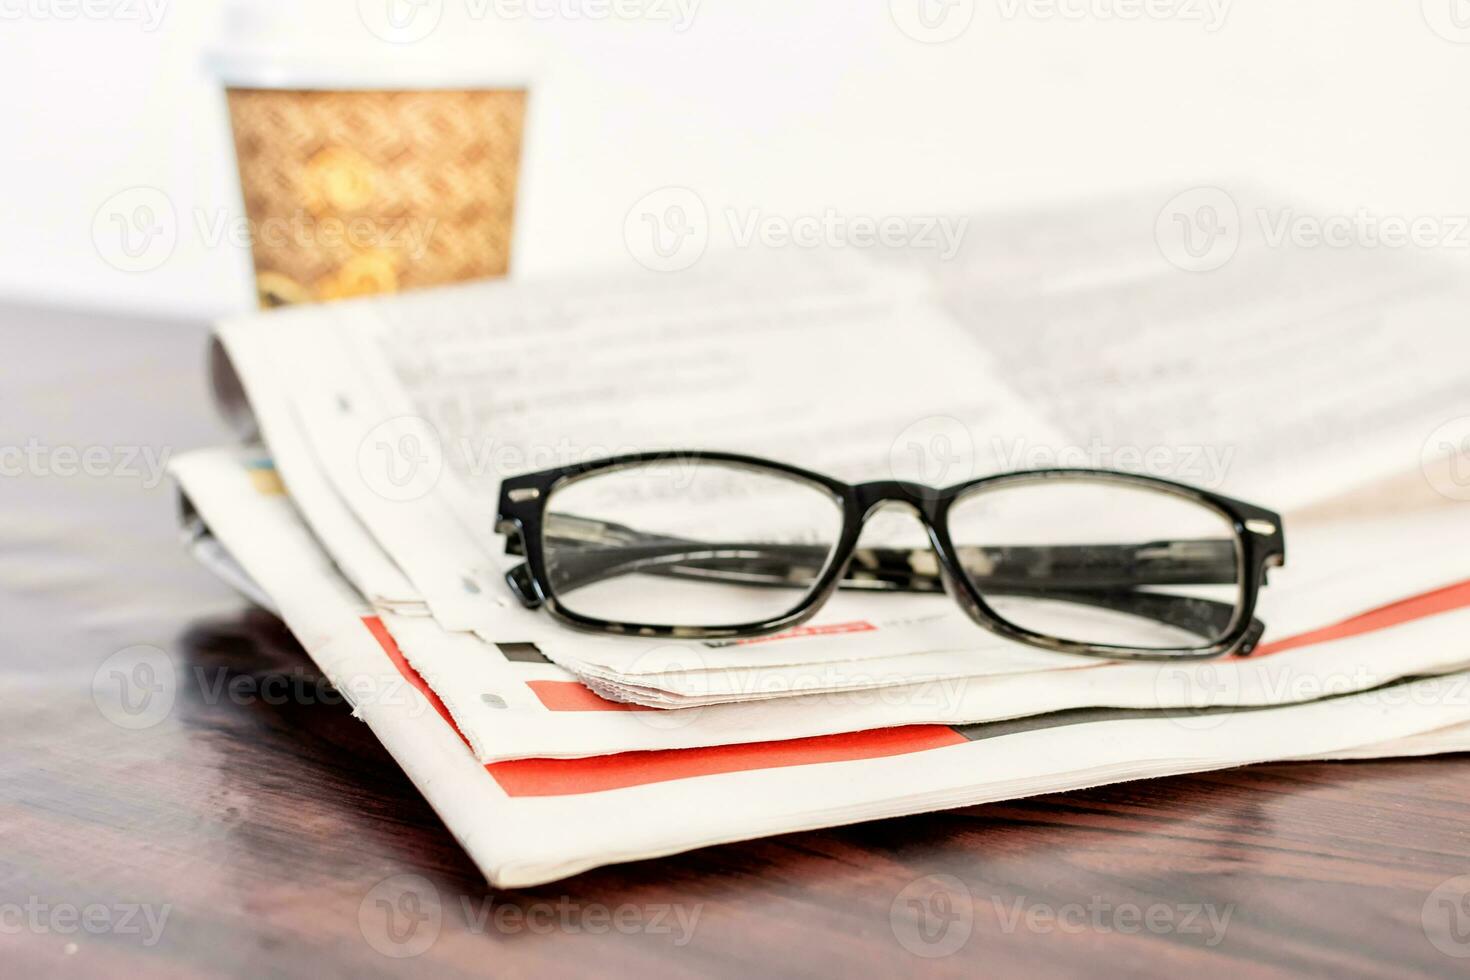 krant- en lezing bril Aan houten tafel. foto